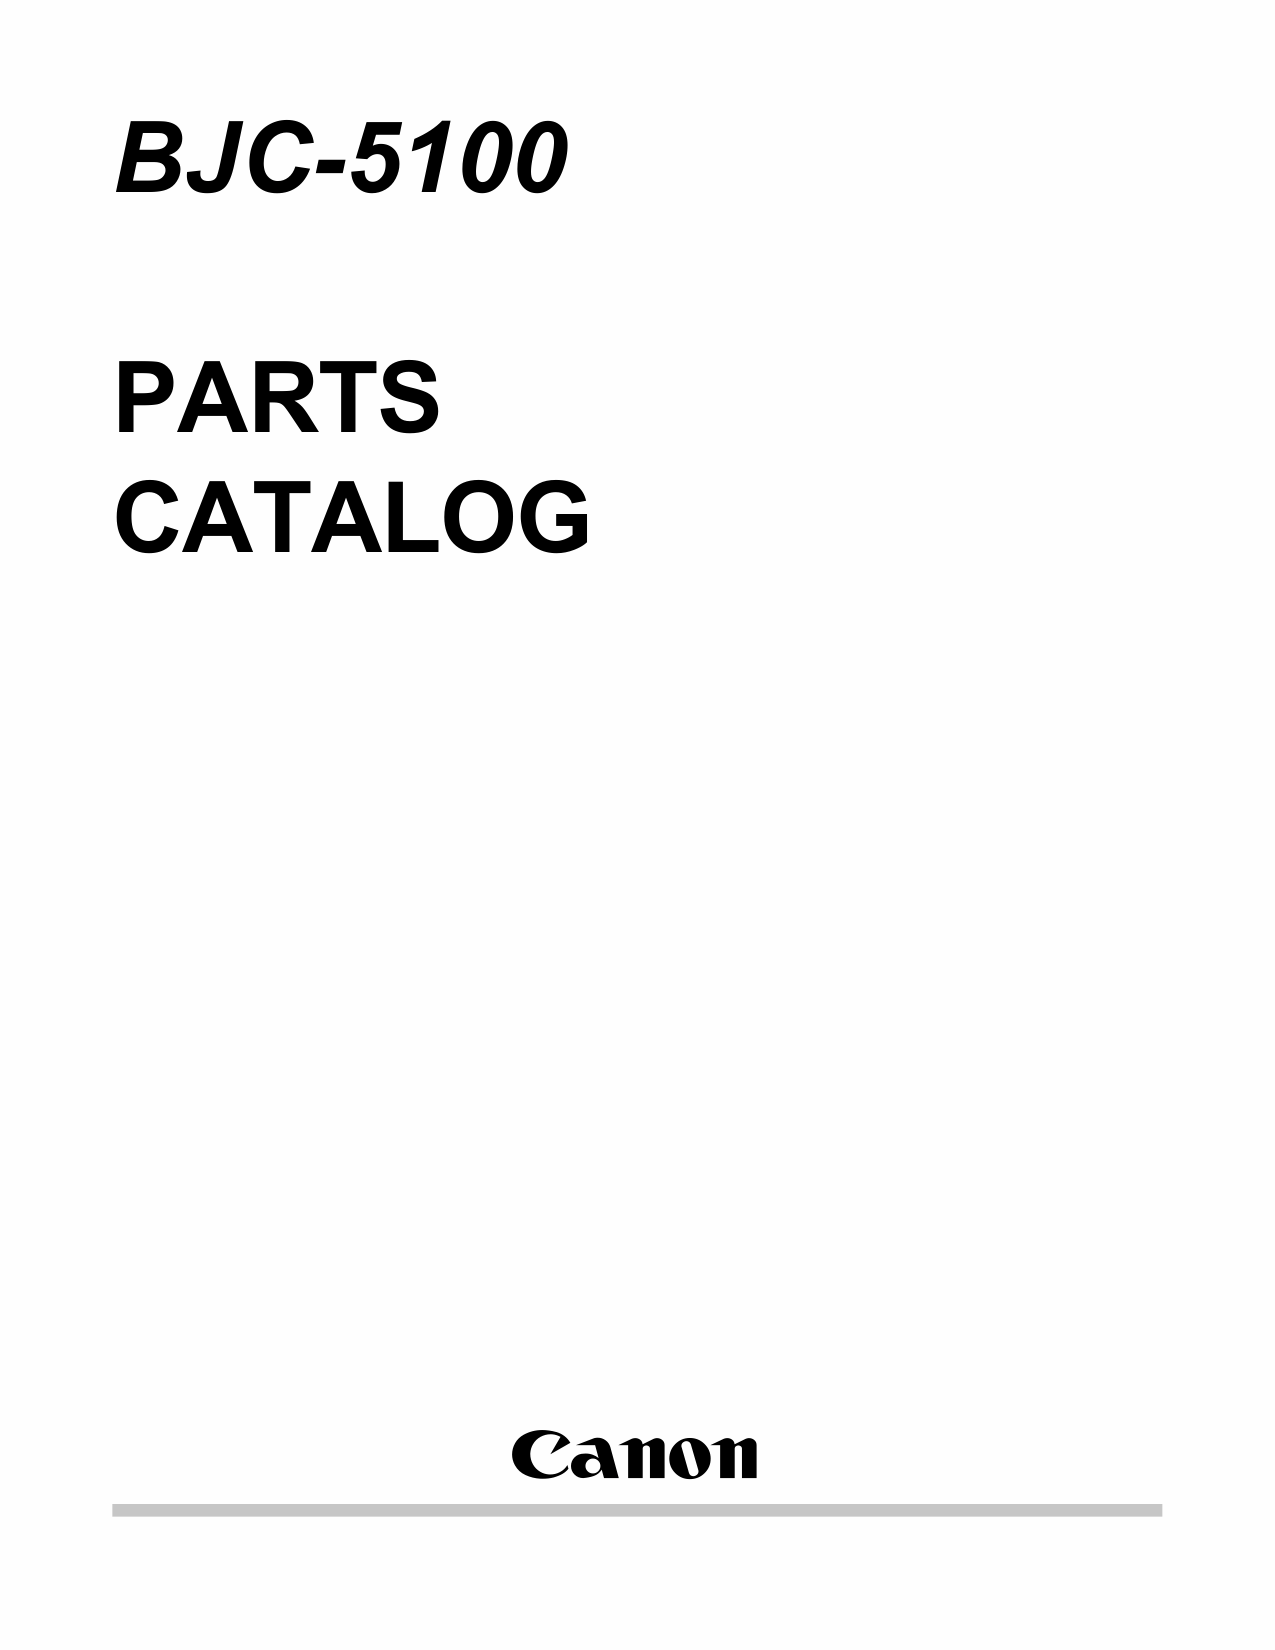 Canon BubbleJet BJC-5100 Parts Catalog Manual-1